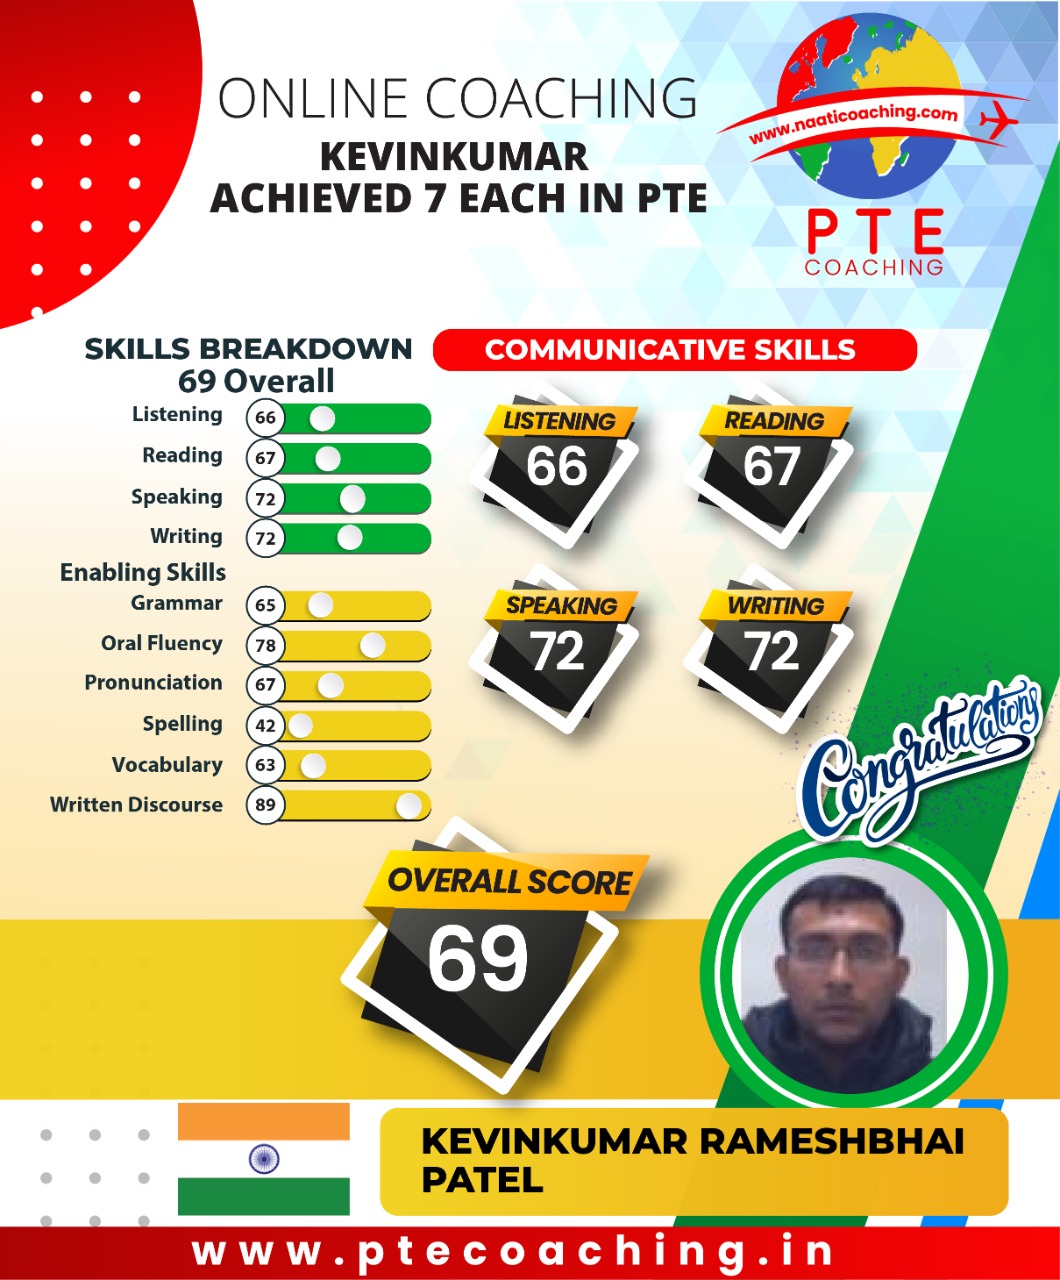 PTE Coaching Scorecard - Kevinkumar achieved 7 each in PTE